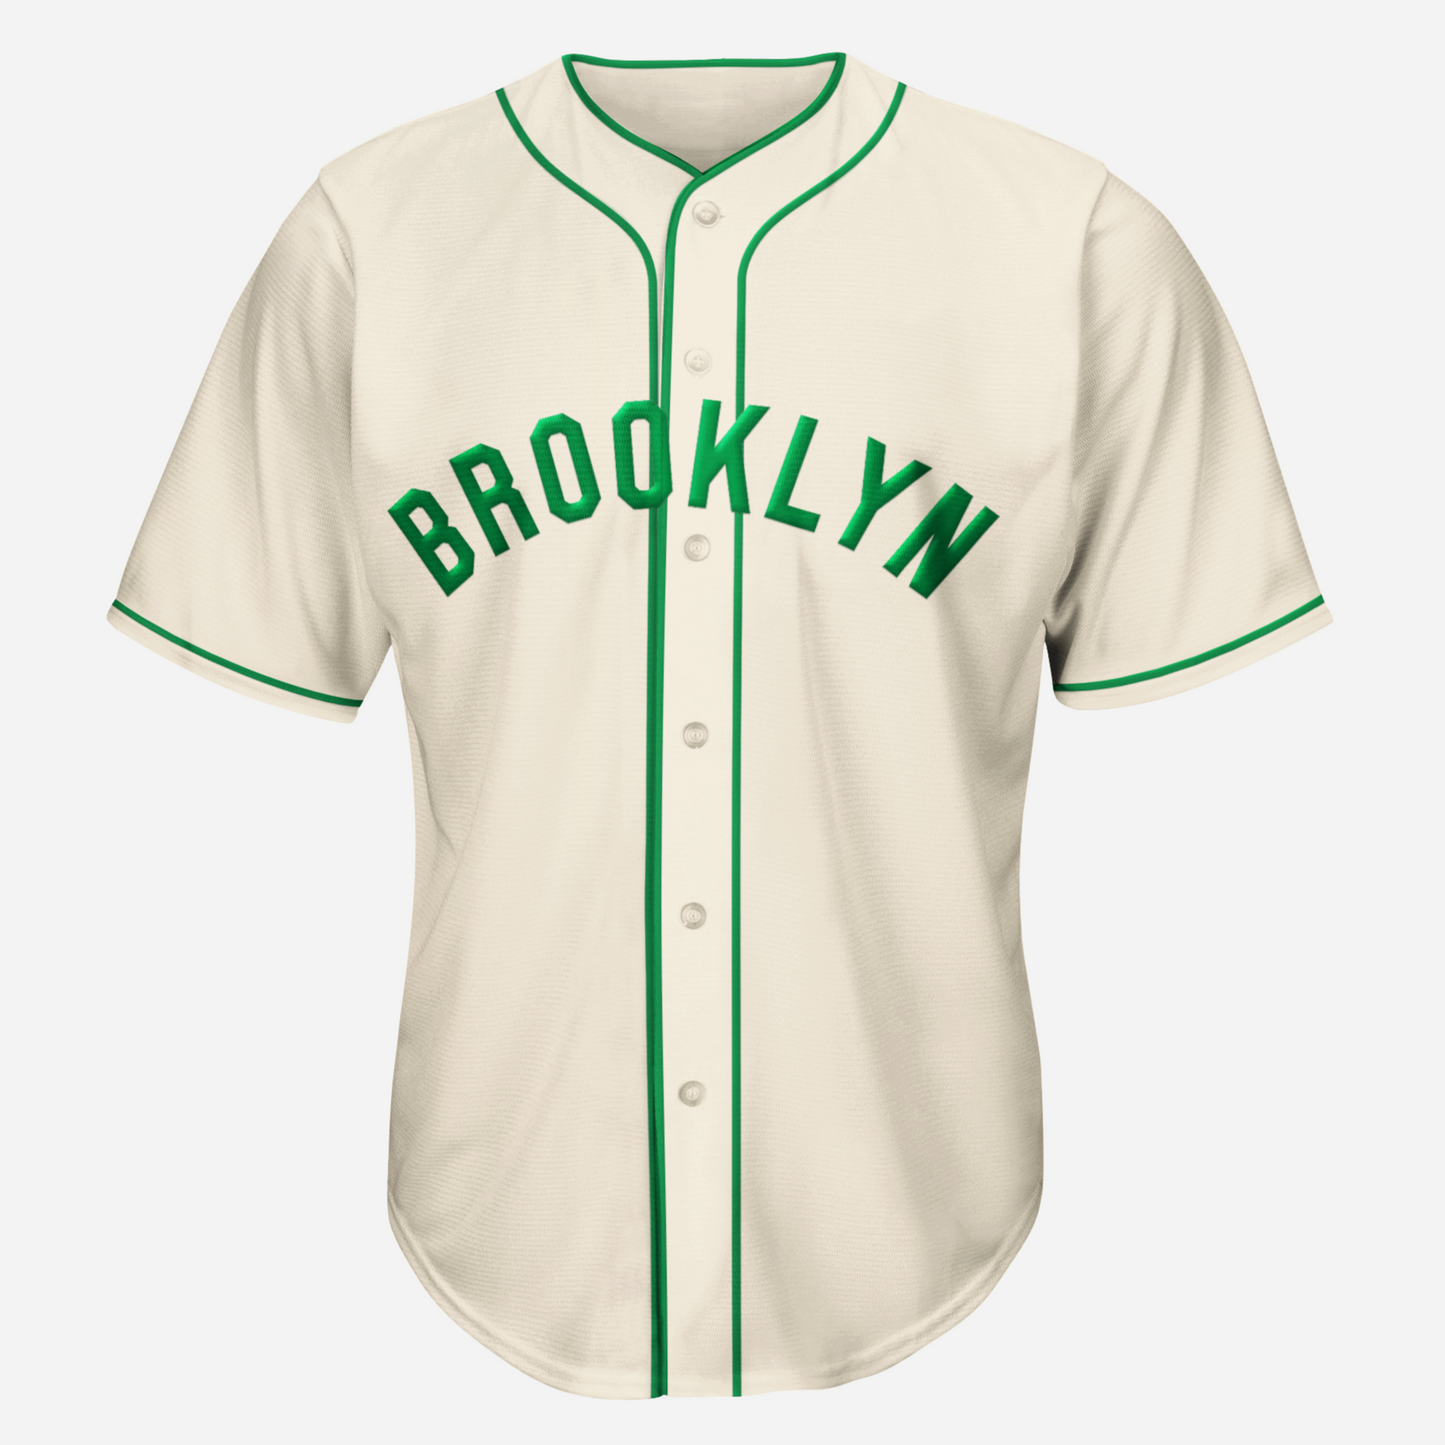 Large 90s Brooklyn Neon Green Mesh Baseball Jersey